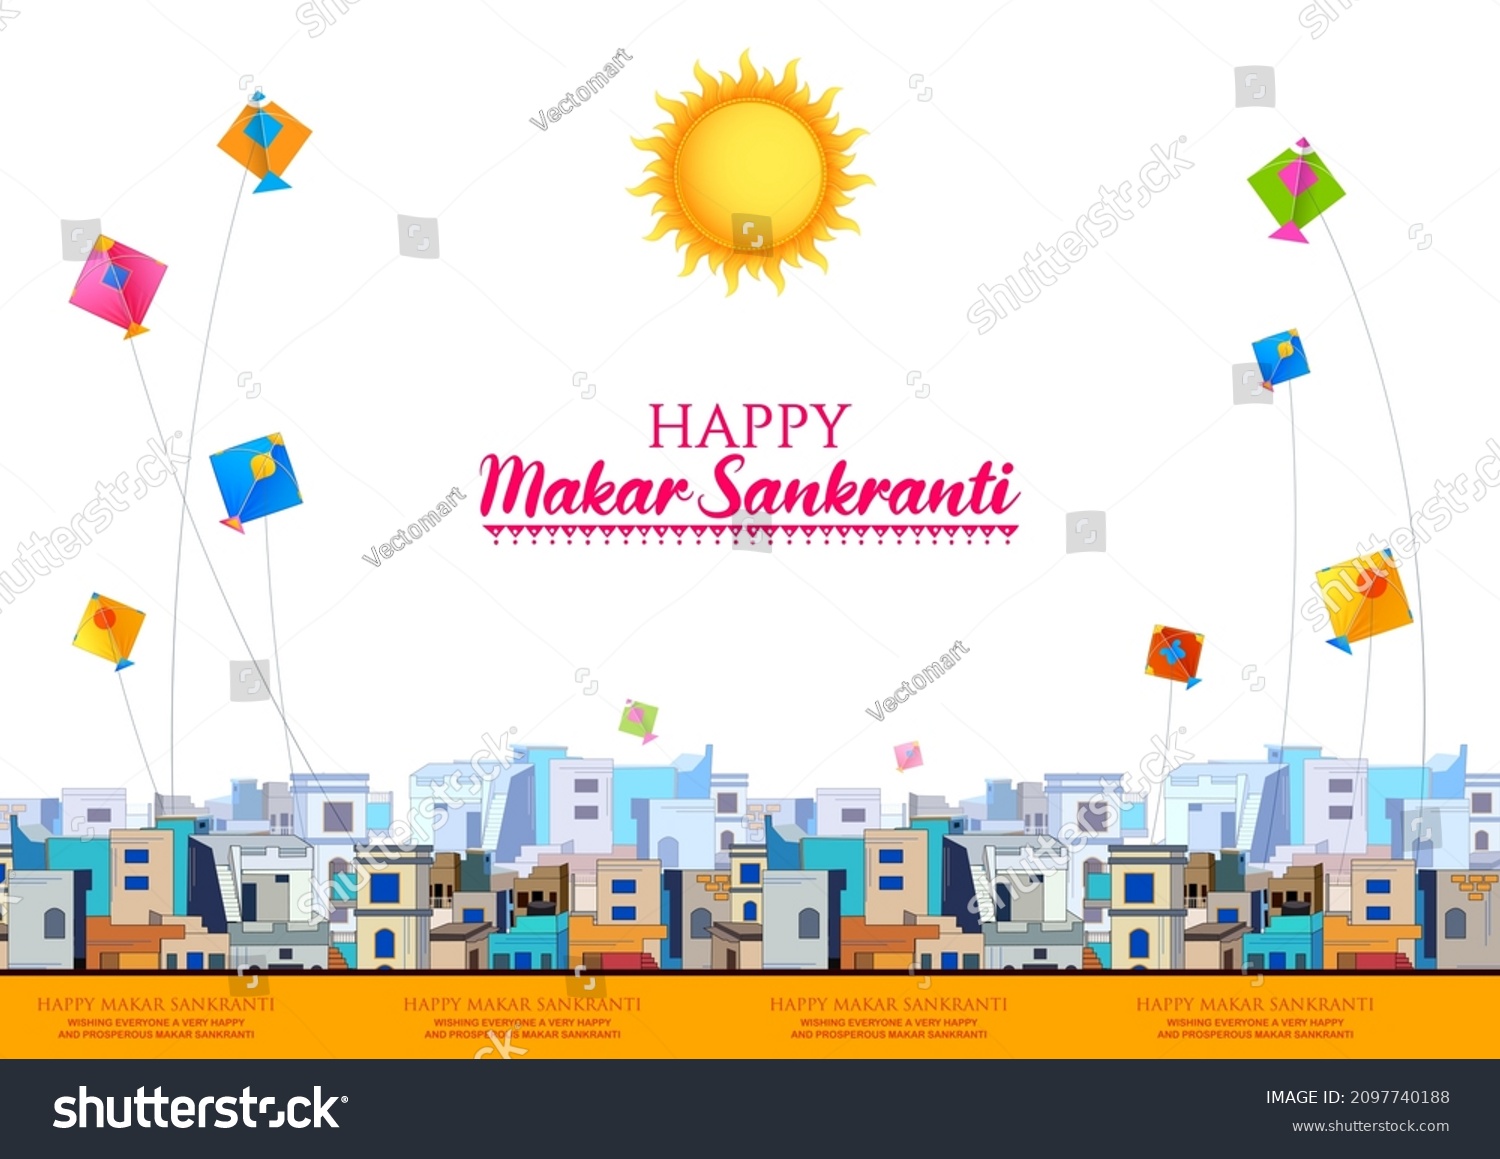 SVG of illustration of Makar Sankranti wallpaper with colorful kite for festival of India
 svg